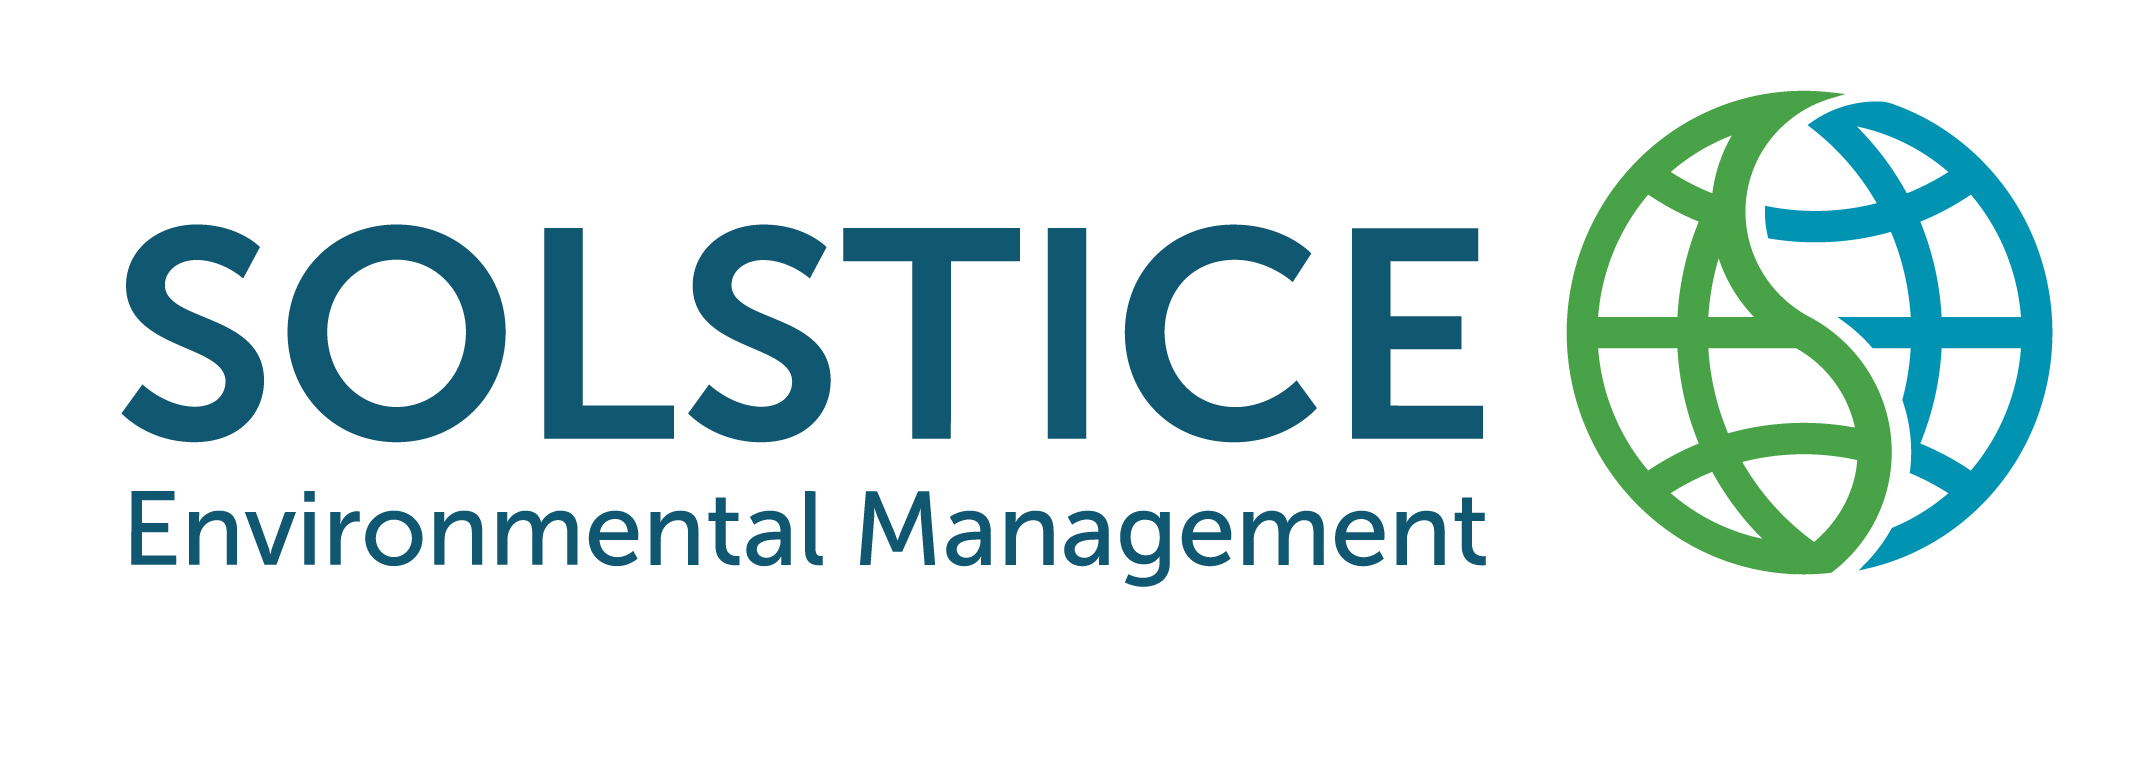 Solstice Environmental Management Company Logo